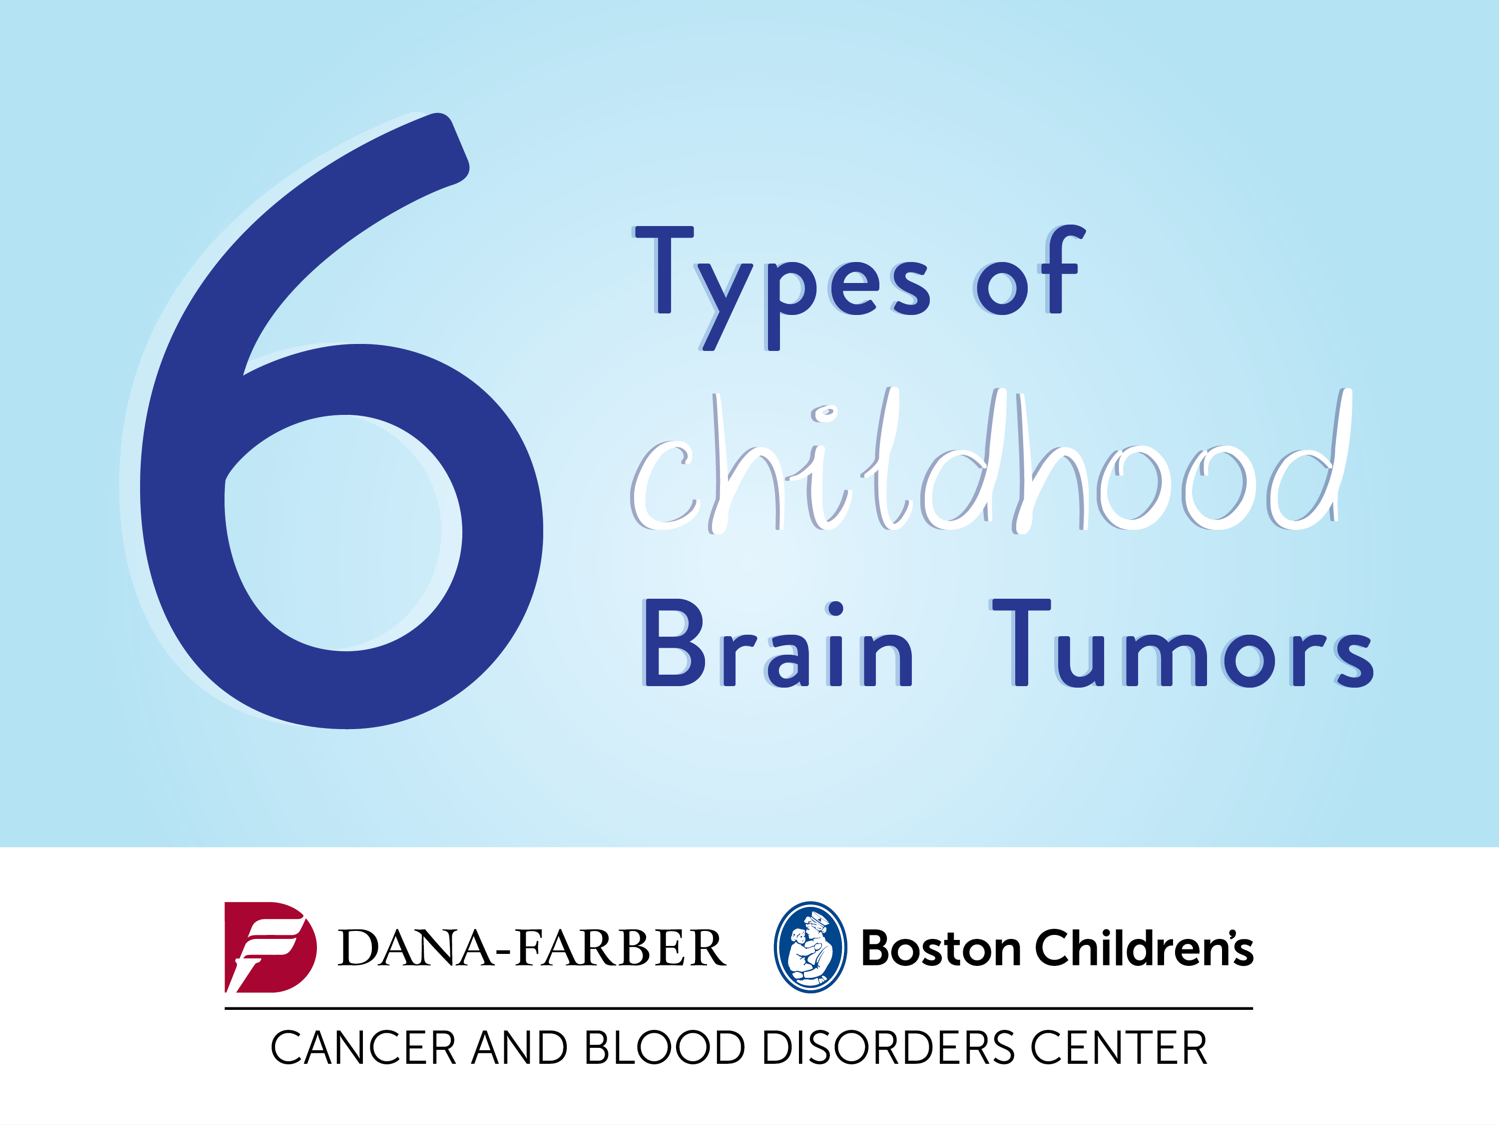 Six types of childhood brain tumors: Glioma, Medulloblastoma, Choroid Plexus Tumors, Ependymoma, Germ Cell Tumors of the Brain, Atypical Teratoid Rhabdoid Tumor (ATRT). Other rare brain tumors include: Neurocytoma, Embryonal Tumors and pineoblastoma, Craniopharyngioma, Neurofibroma/plexiform neurofibroma, Meningioma, Schwannoma (Neurilemoma).